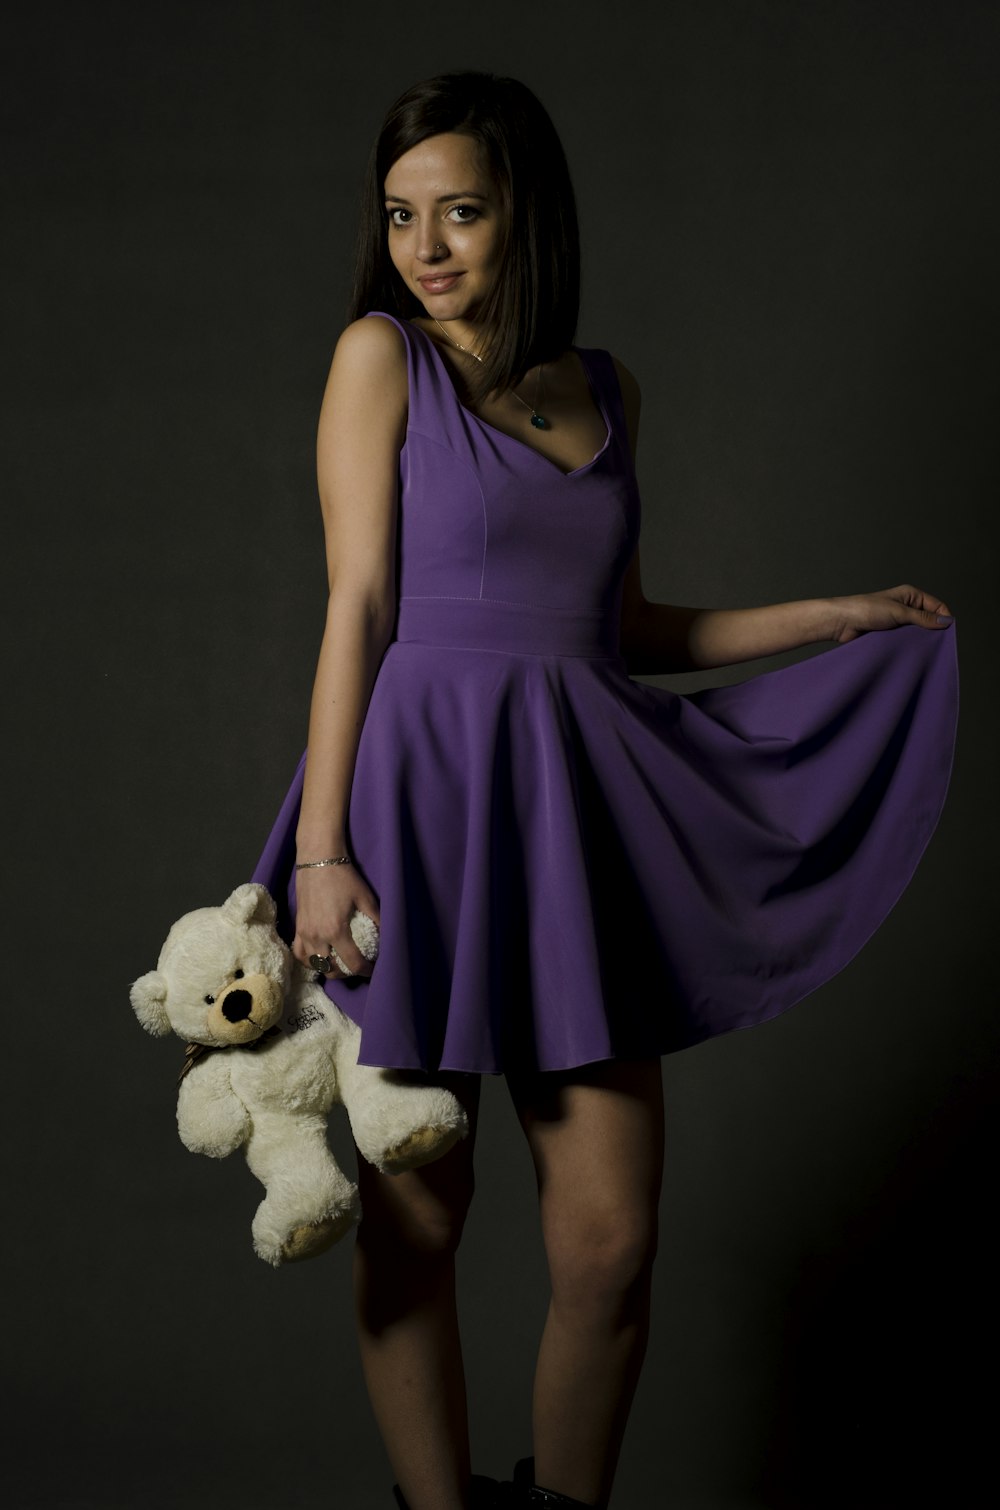 woman in purple sleeveless dress holing white teddy bear